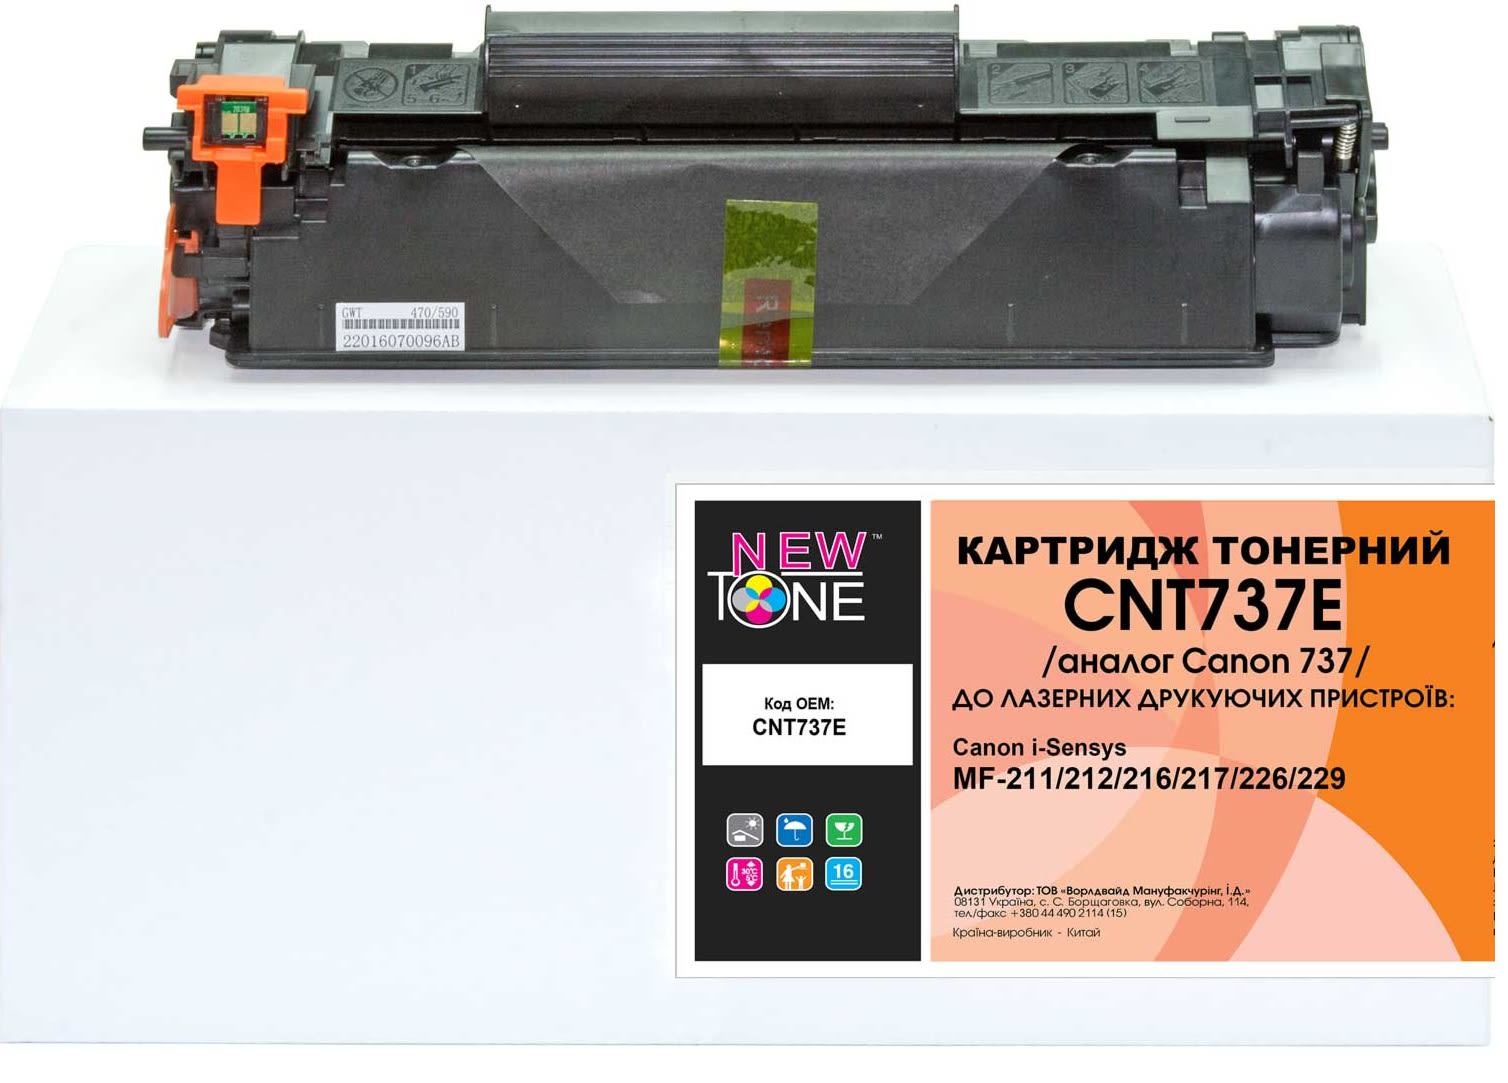 Картриджи NewTone CNT737E для Canon i-Sensys MF-211 Купить комплект картриджей.